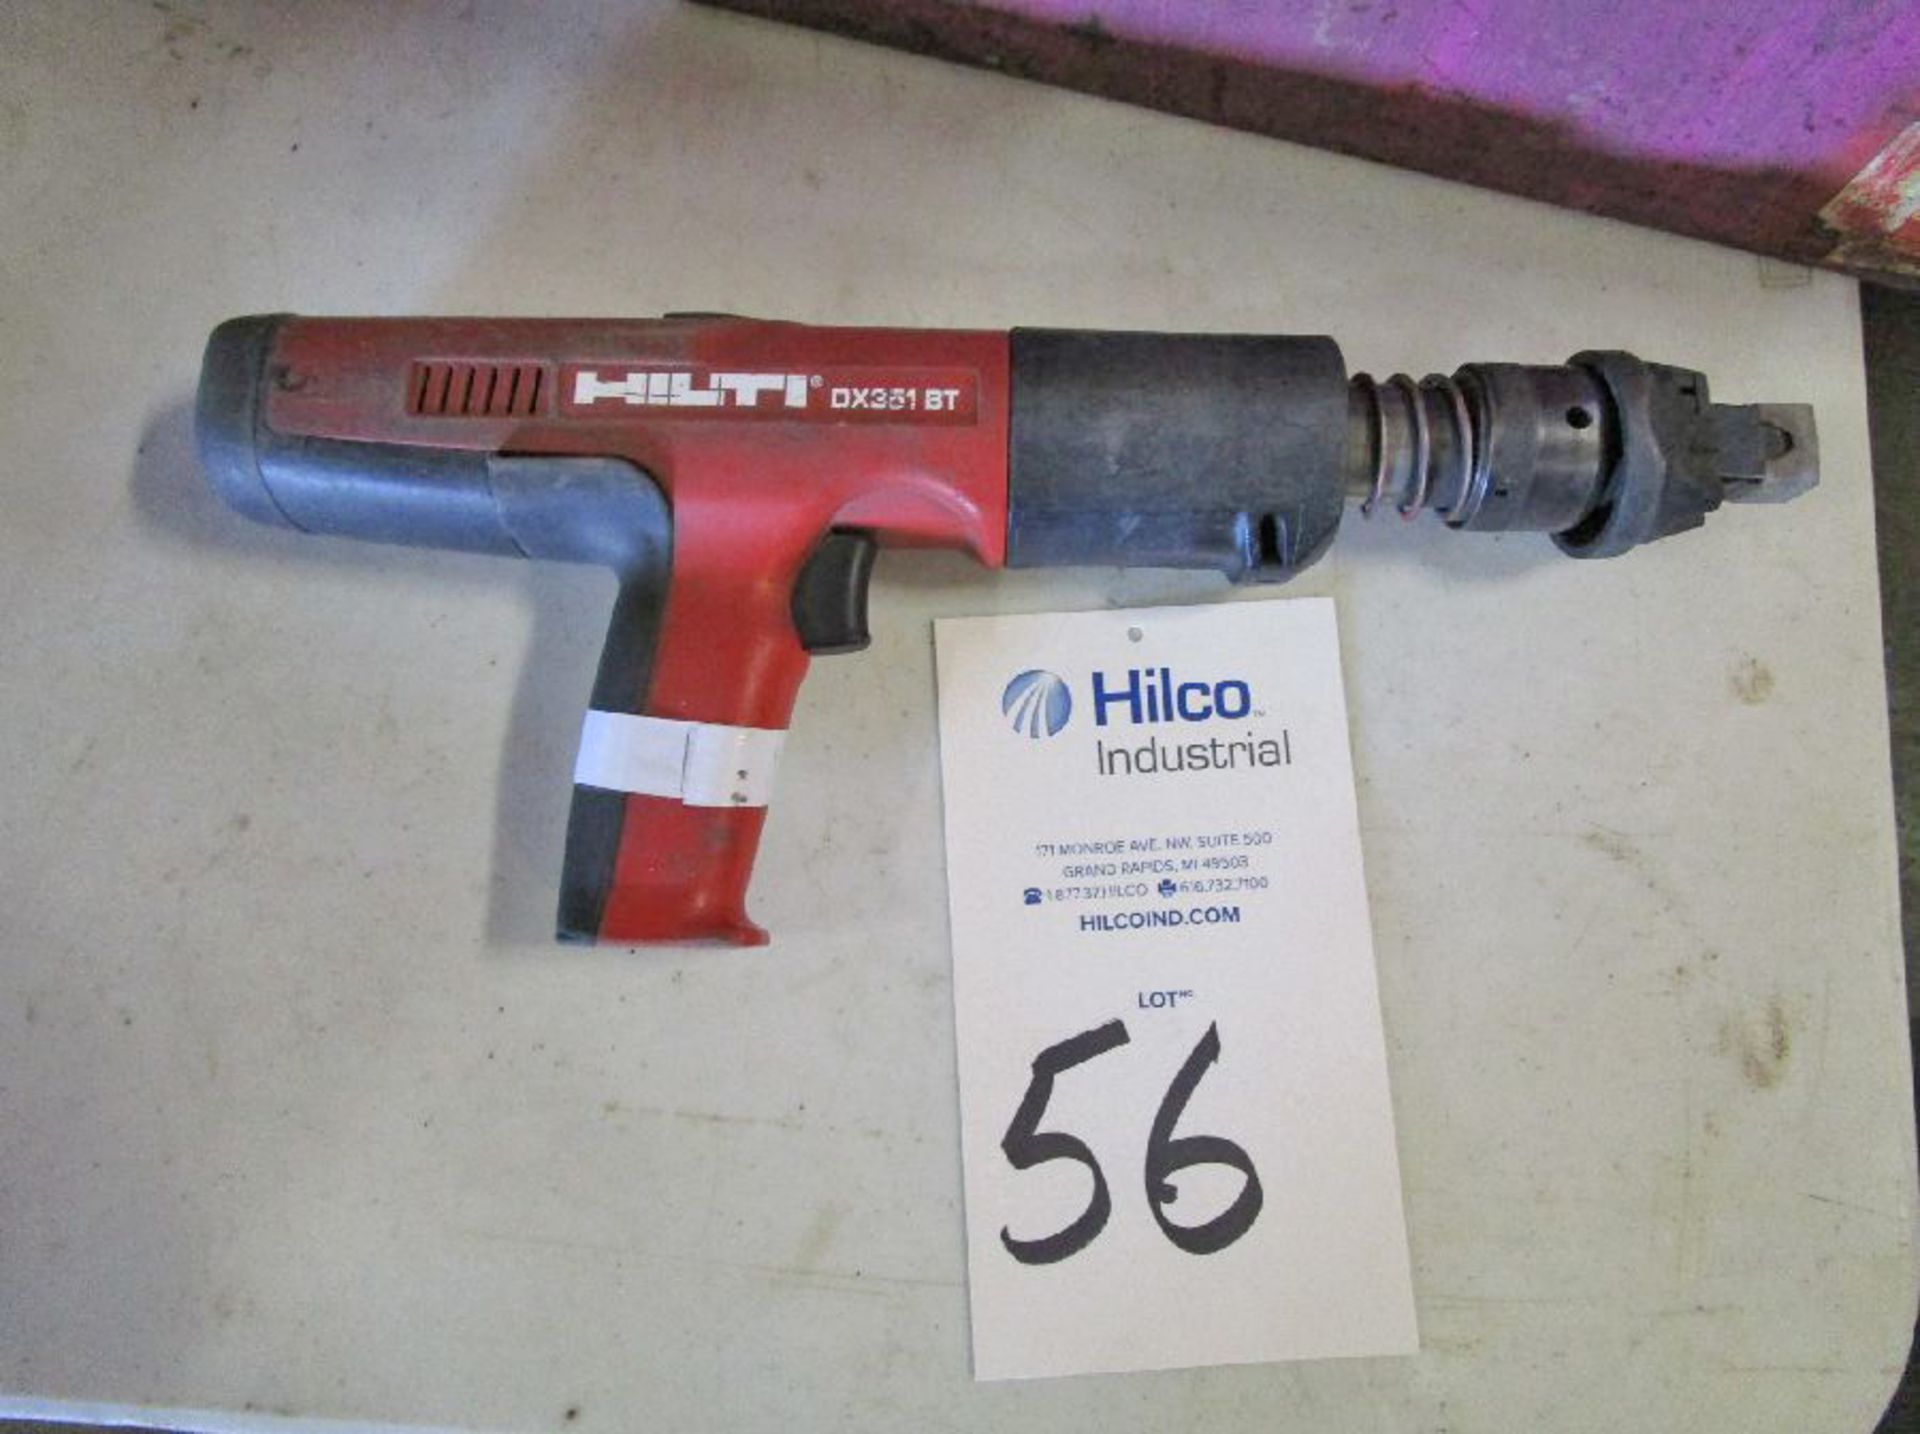 Hilti Model DX 351 BT Powder Actuated Nailer